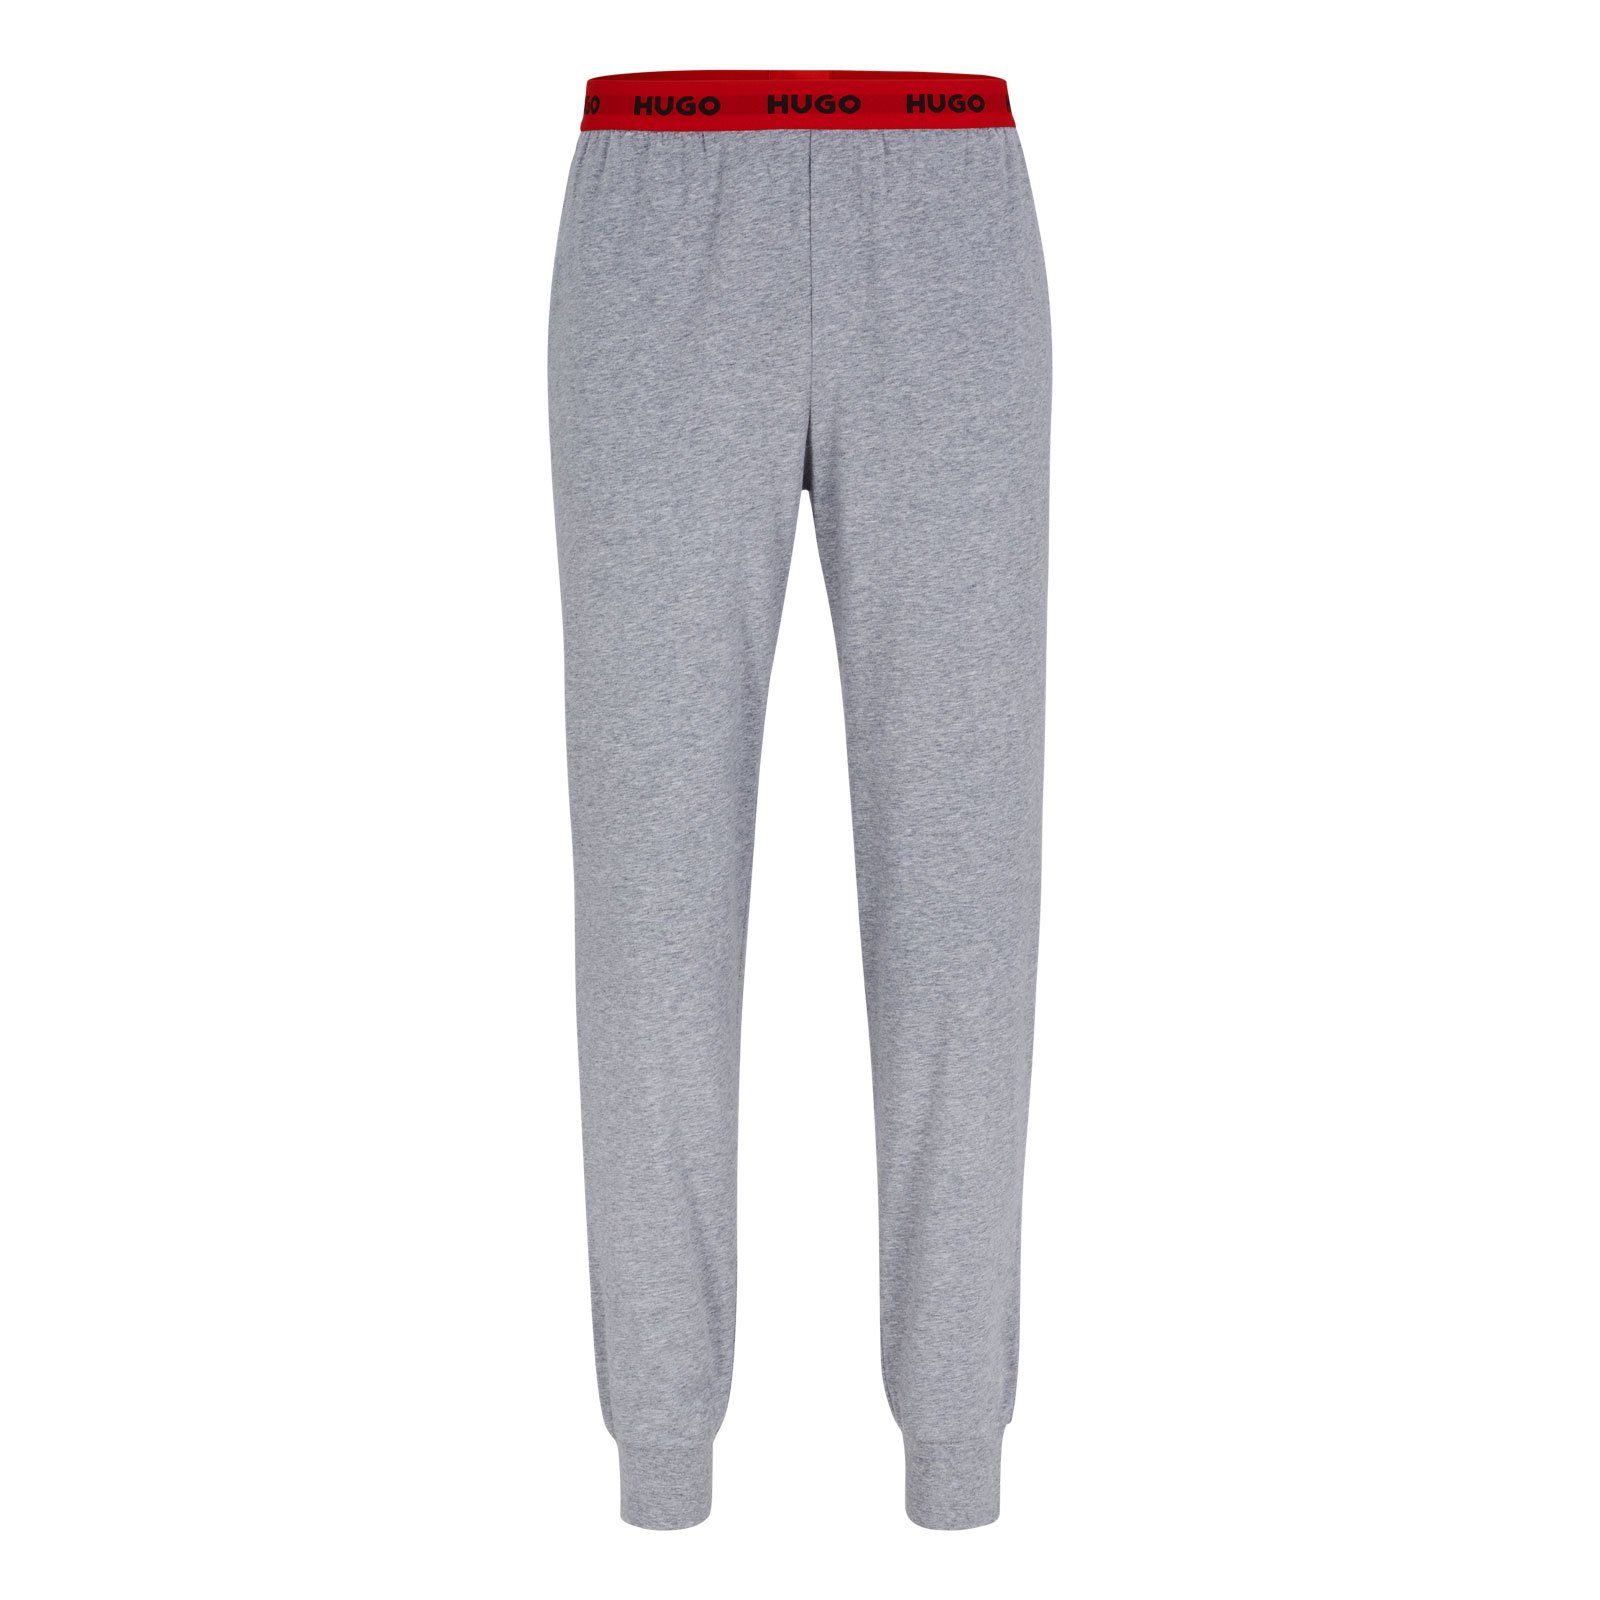 HUGO Pyjamahose Linked Pants Elastikbund mit grey 035 sichtbarem medium